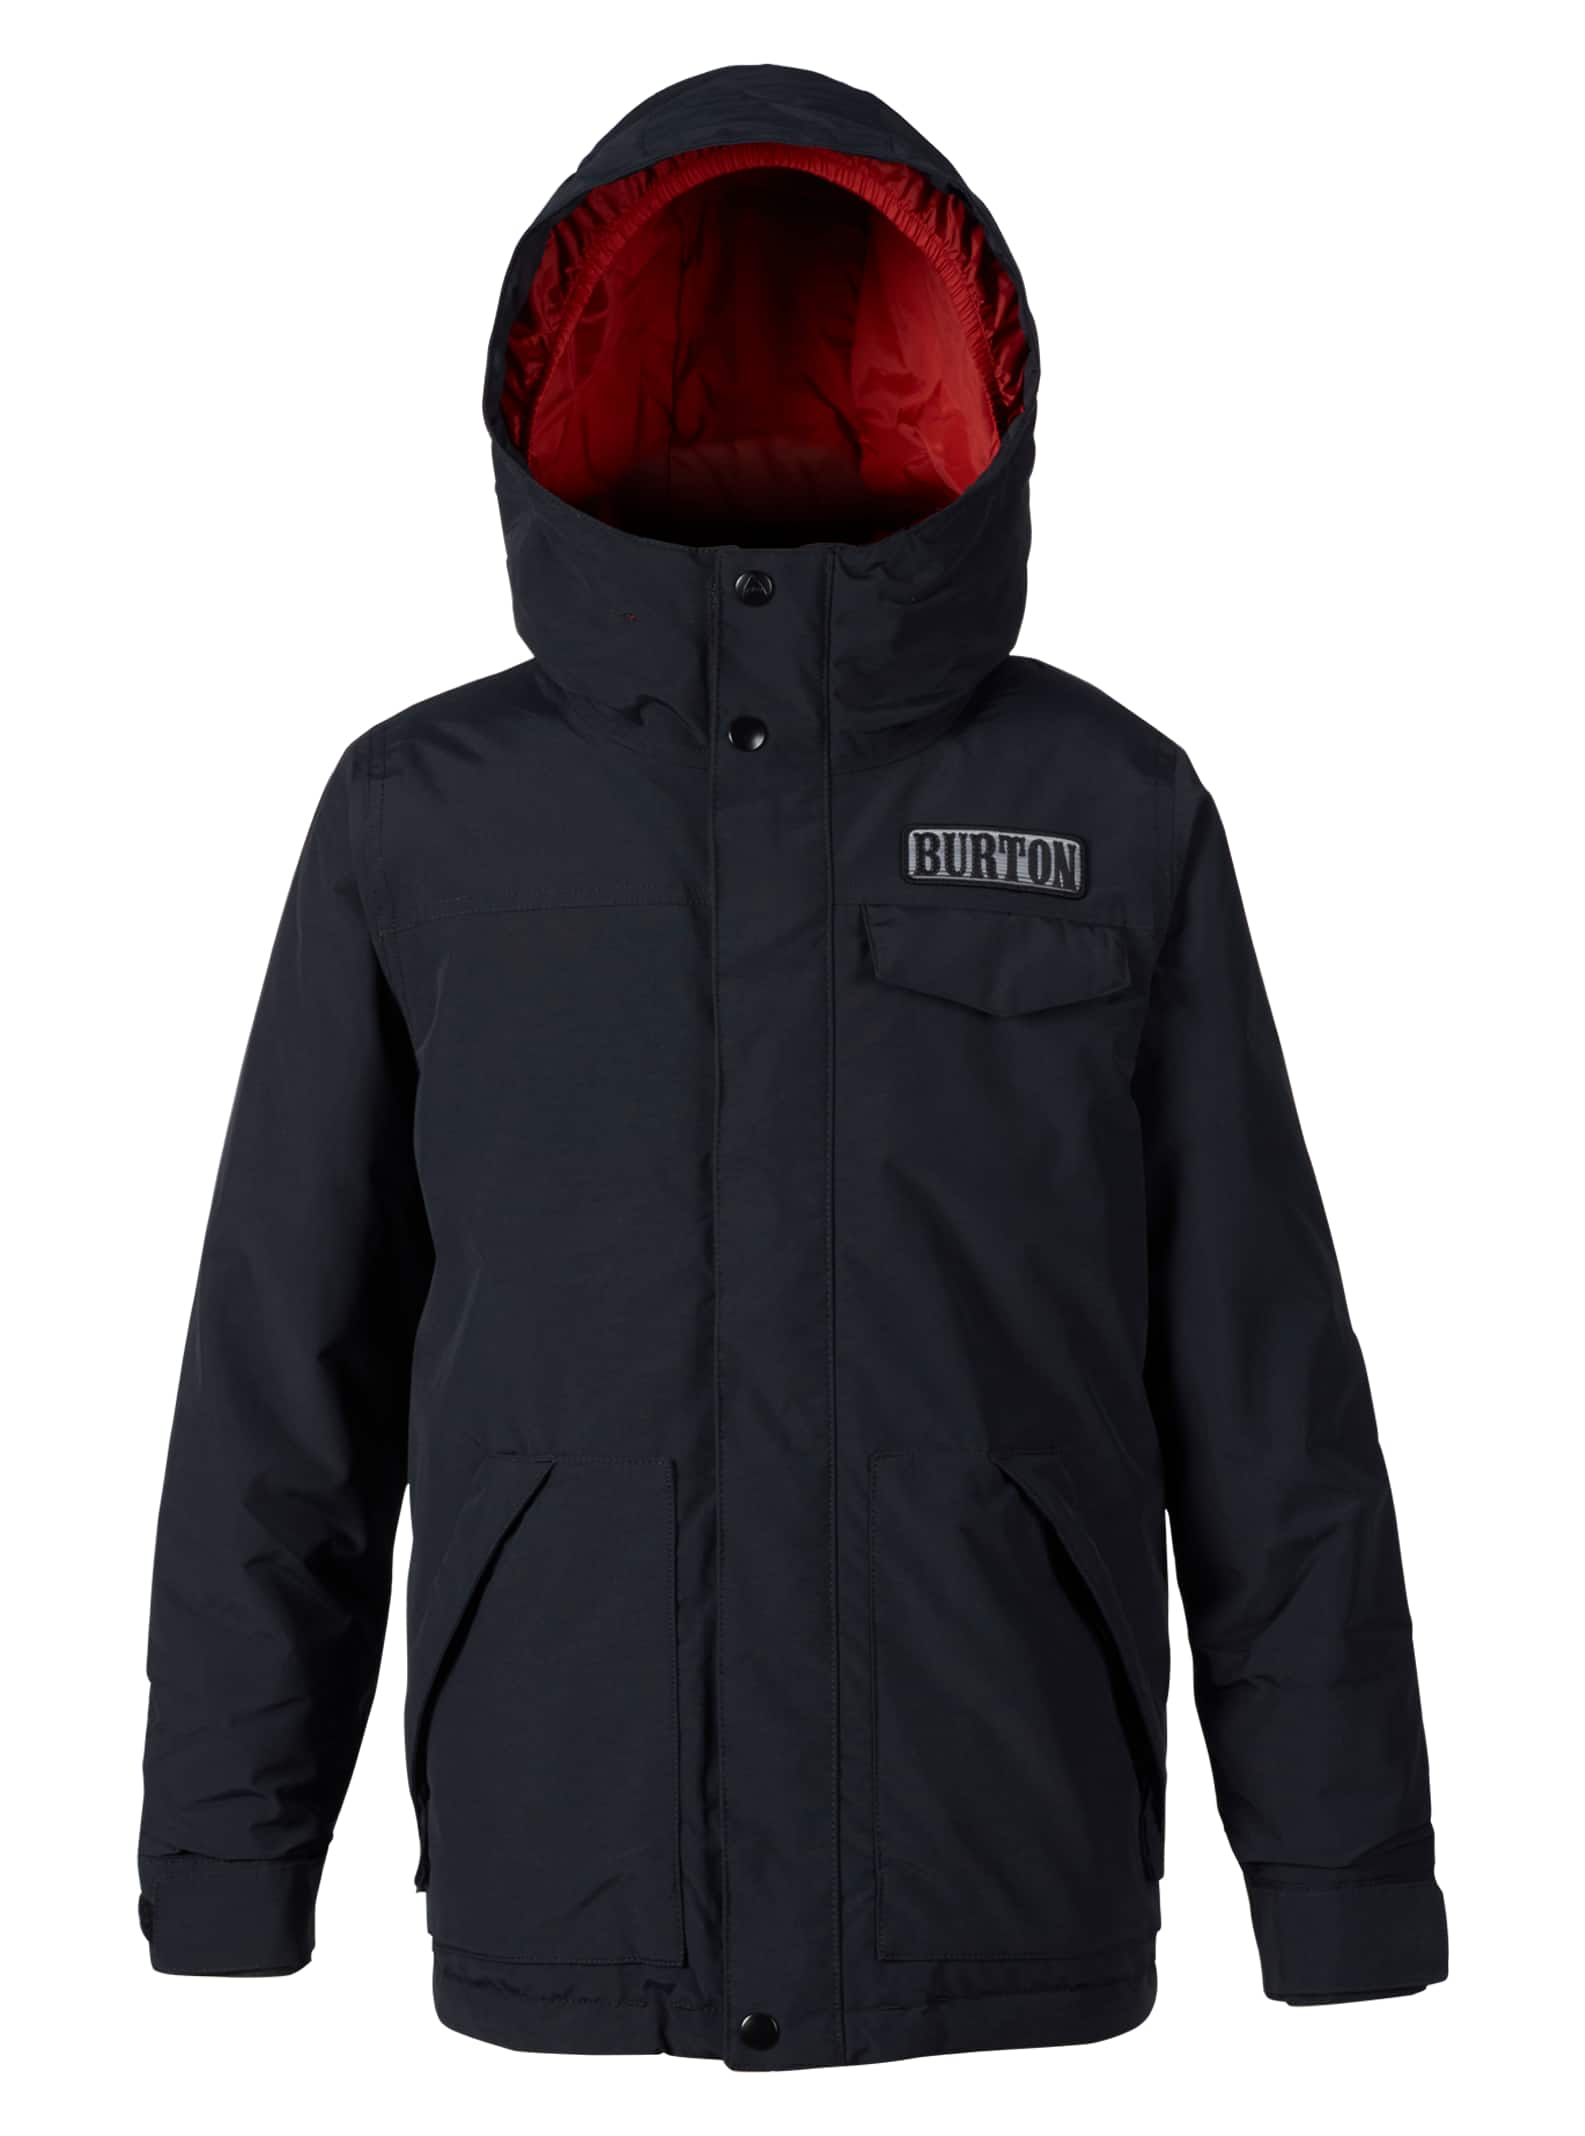 Boys' Burton Dugout Jacket | Burton.com Winter 2020 US